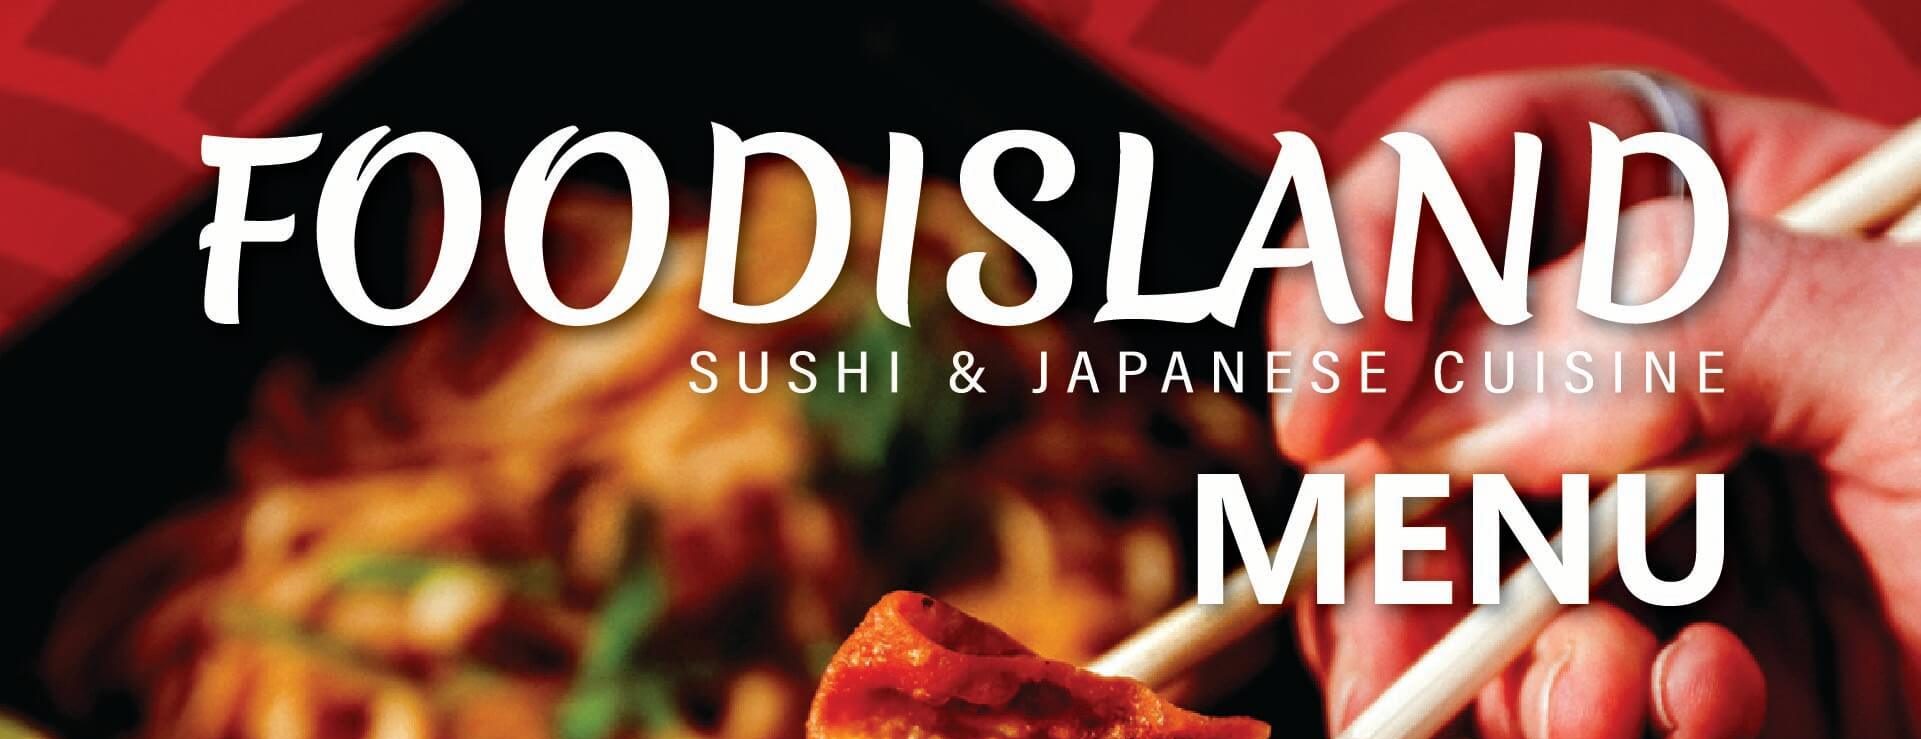 Foodisland Sushi Menu Header